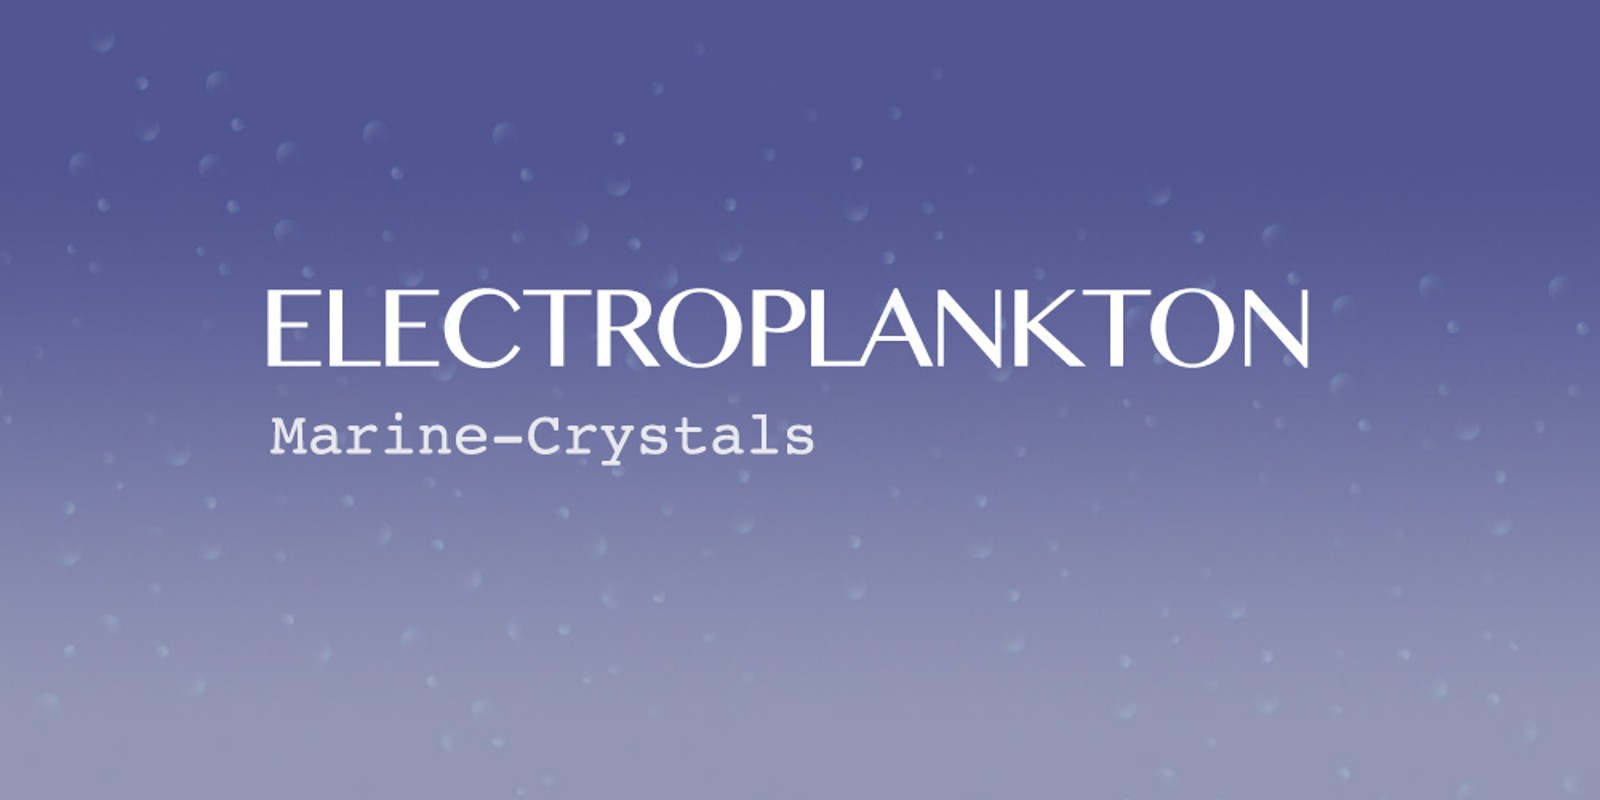 Electroplankton™ Marine-Crystals